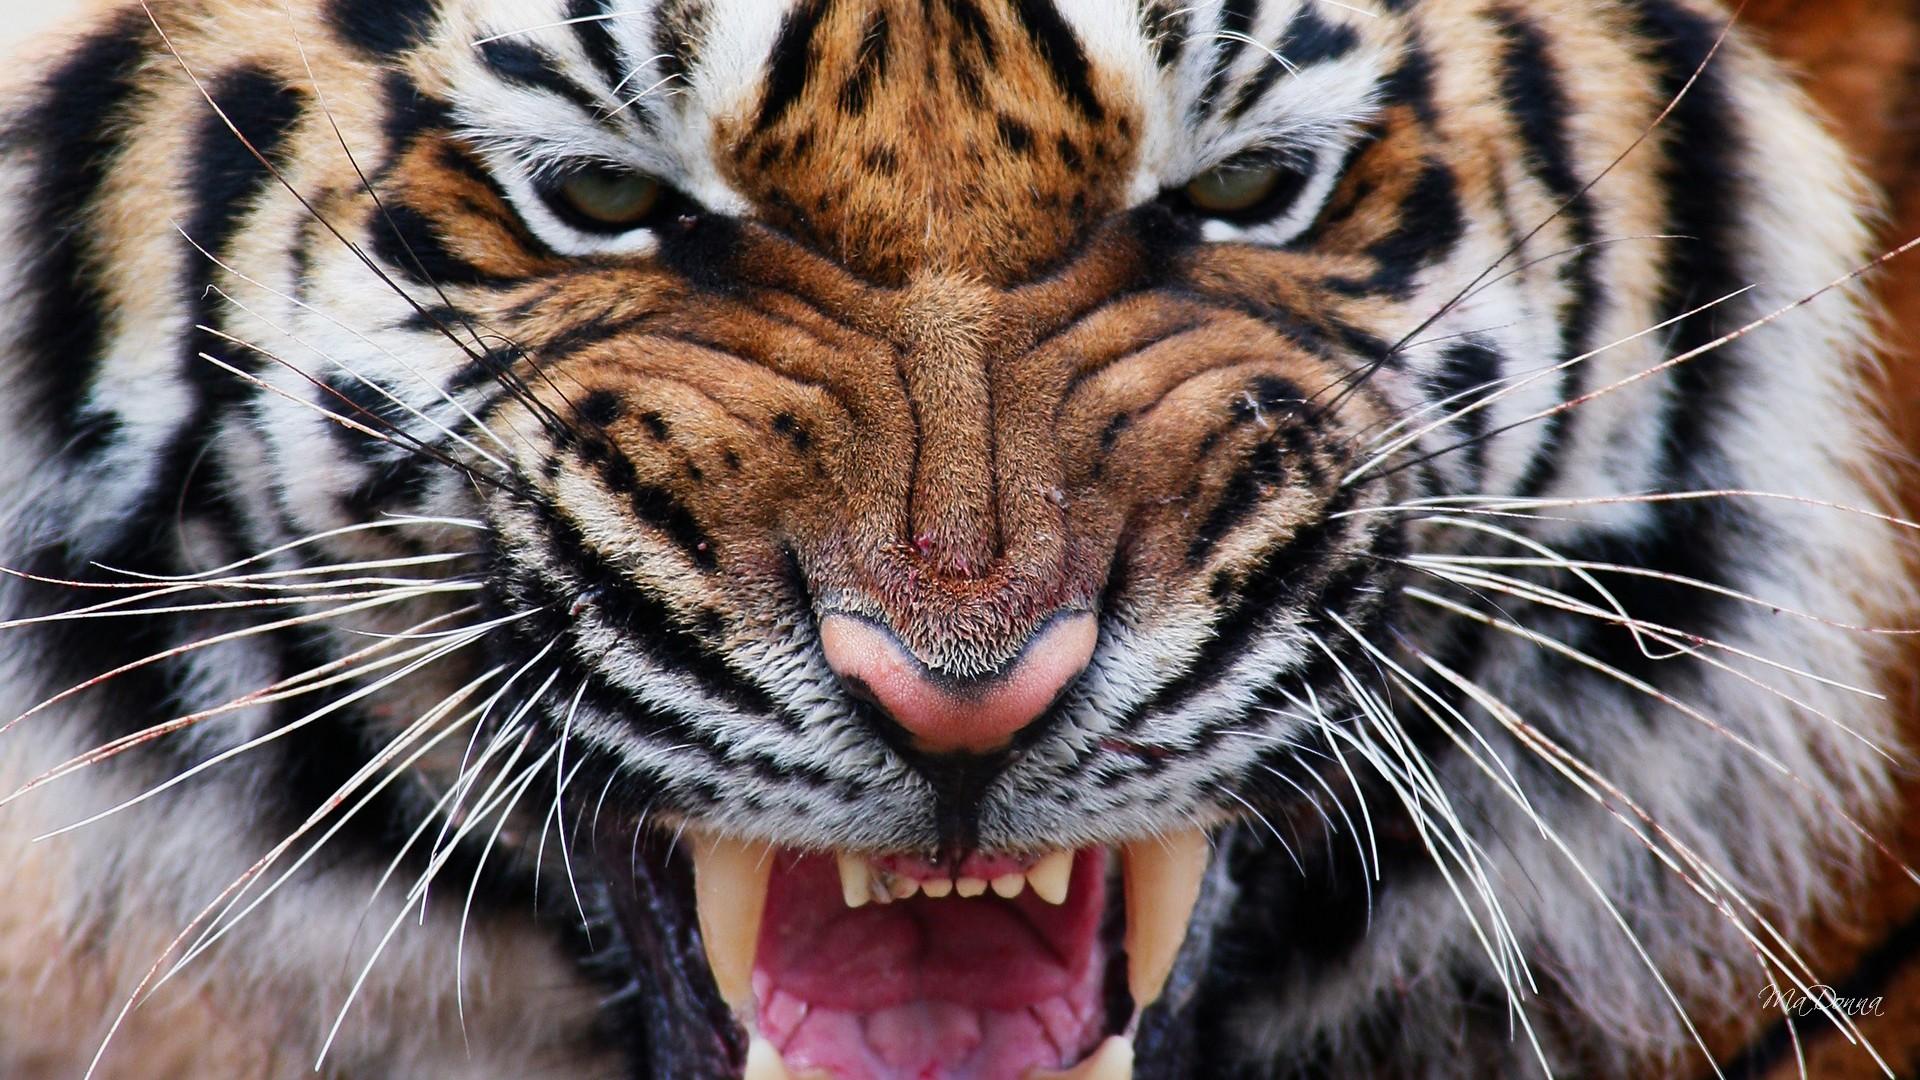 Tiger HD Wallpaper | Background Image | 1920x1080 | ID ...